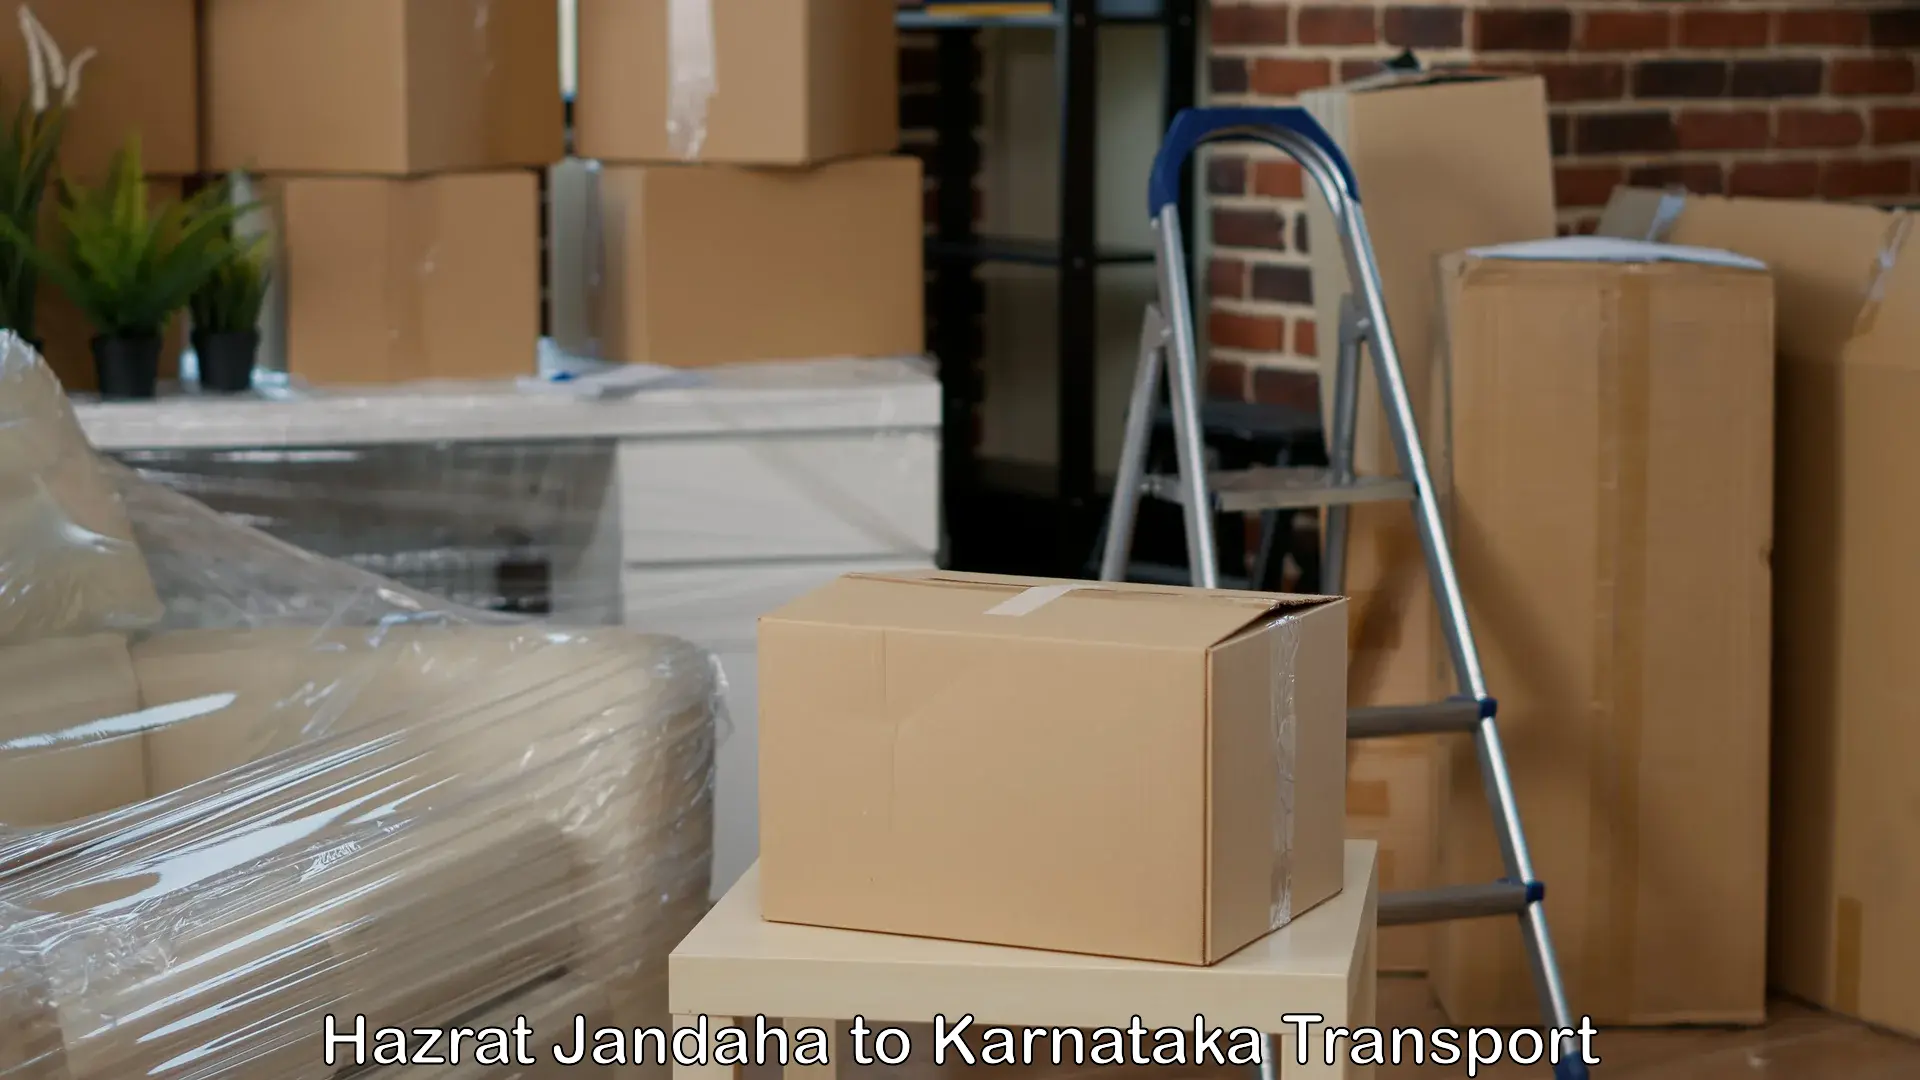 Truck transport companies in India Hazrat Jandaha to Hagaribommanahalli